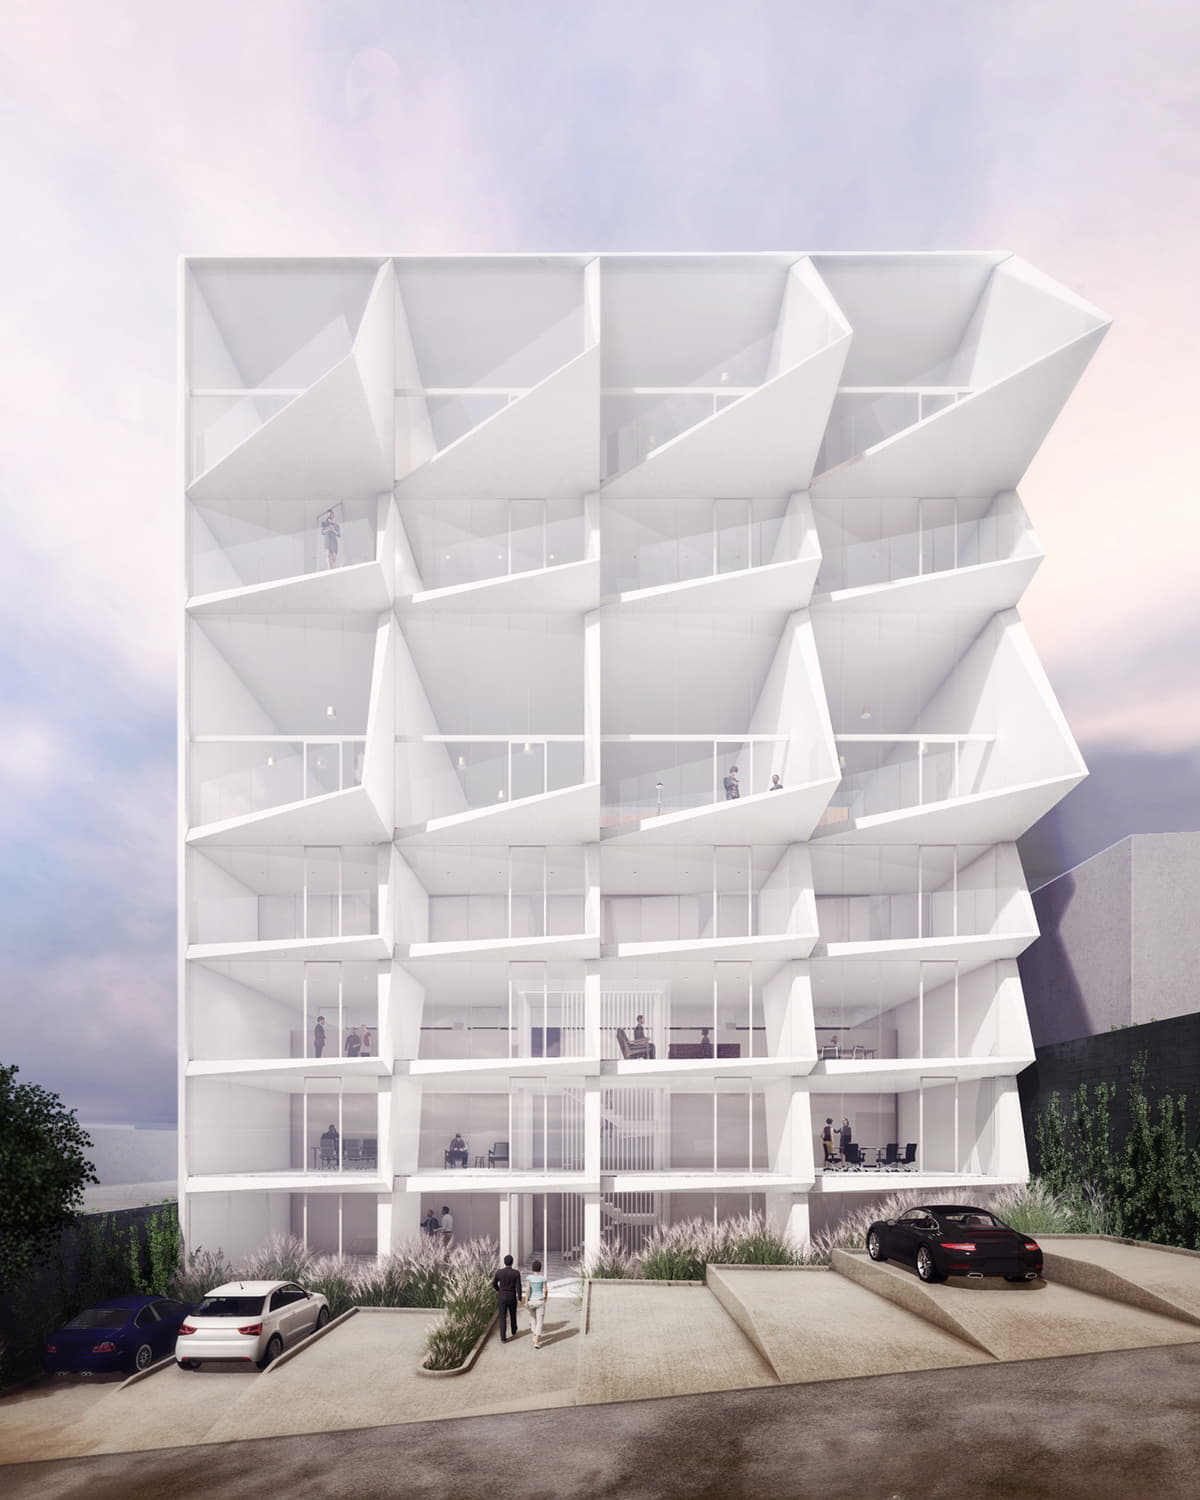 5-departamentos-alveare-multifamiliar-vertical-arquidromo-arquitectos-monterrey-mexico.jpg